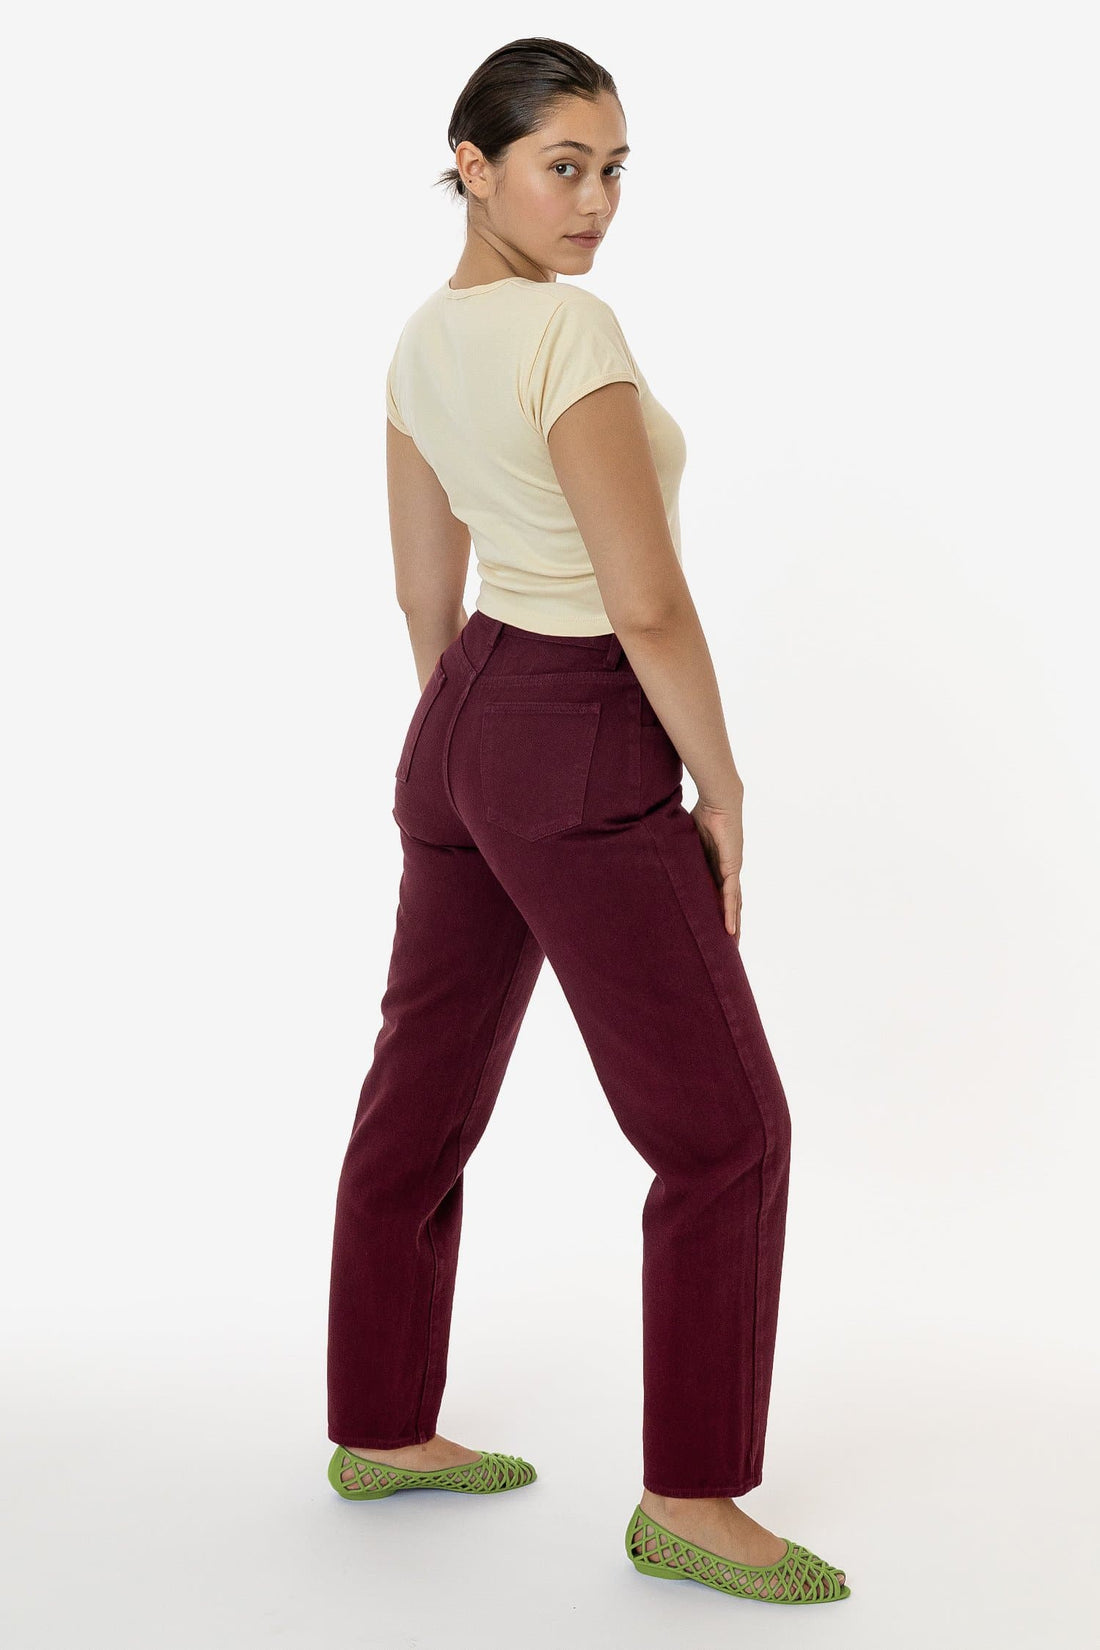 RBDW01GD - Garment Dye Women's Relaxed Fit Bull Denim Jean (New Colors ...